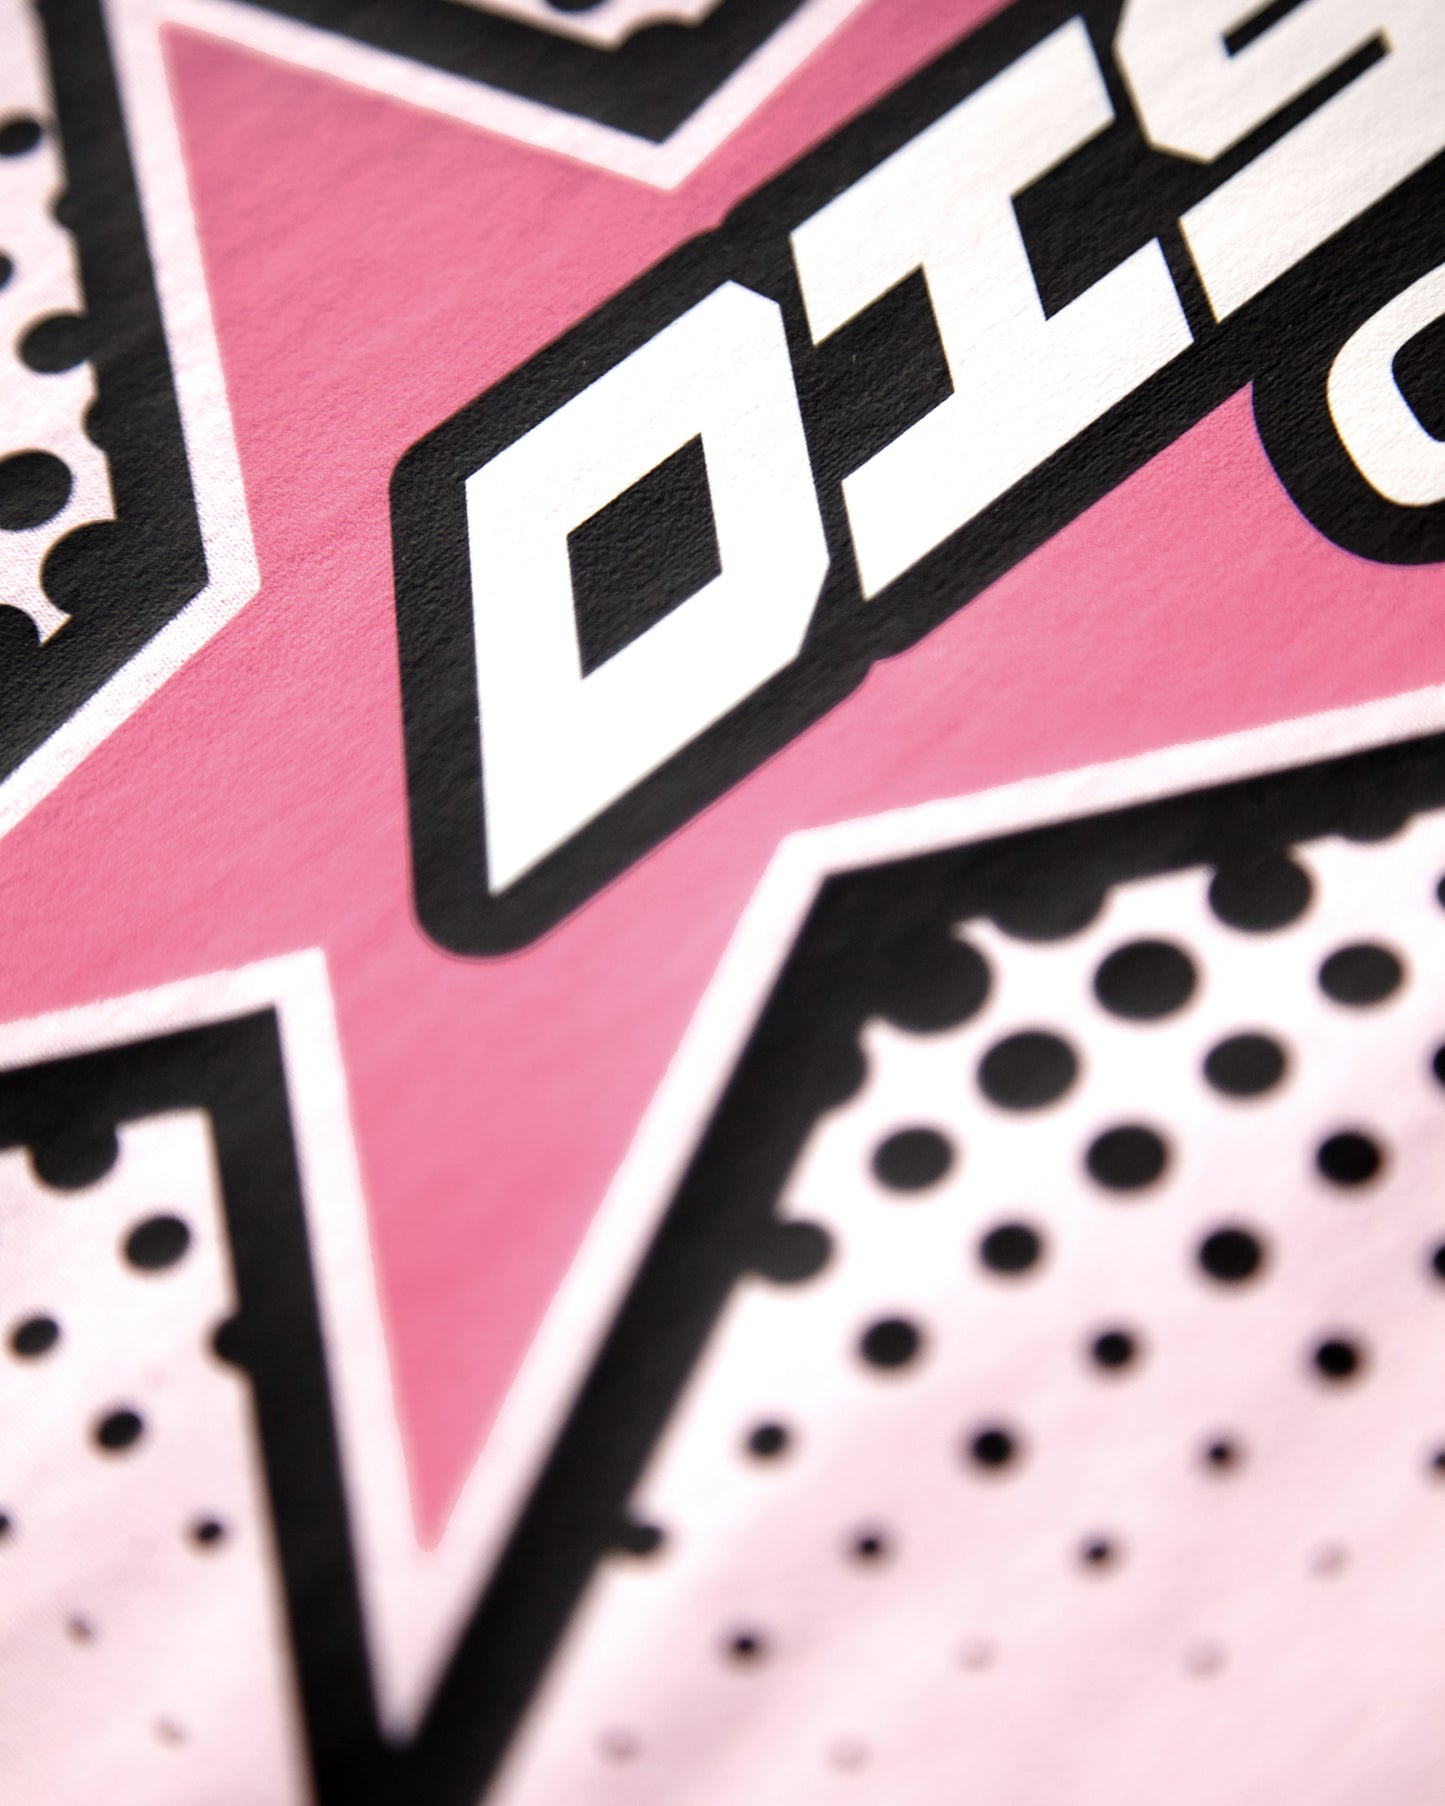 Disco cub on pink - sleeveless crop top.